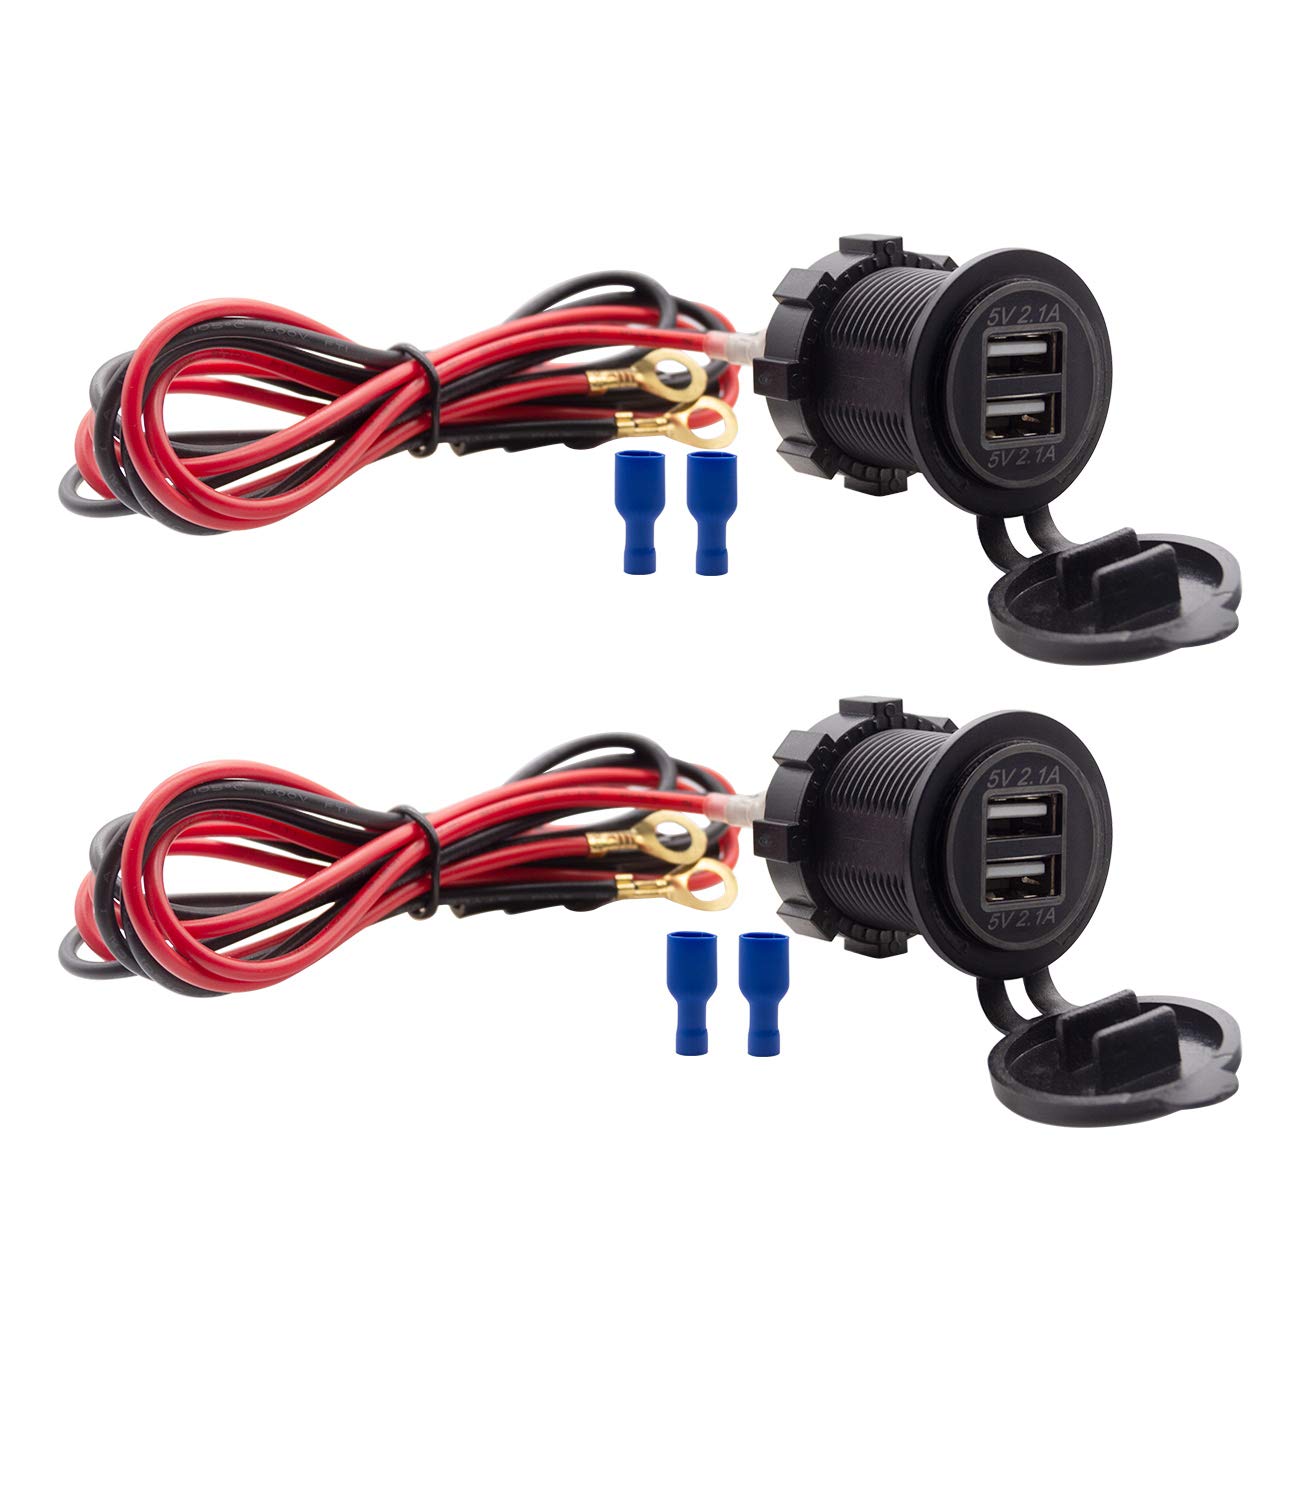 Dual USB Charger Socket Waterproof Power Outlet 12V/24V 2.1A & 2.1A for Car Boat Marine RV Mobile Blue LED